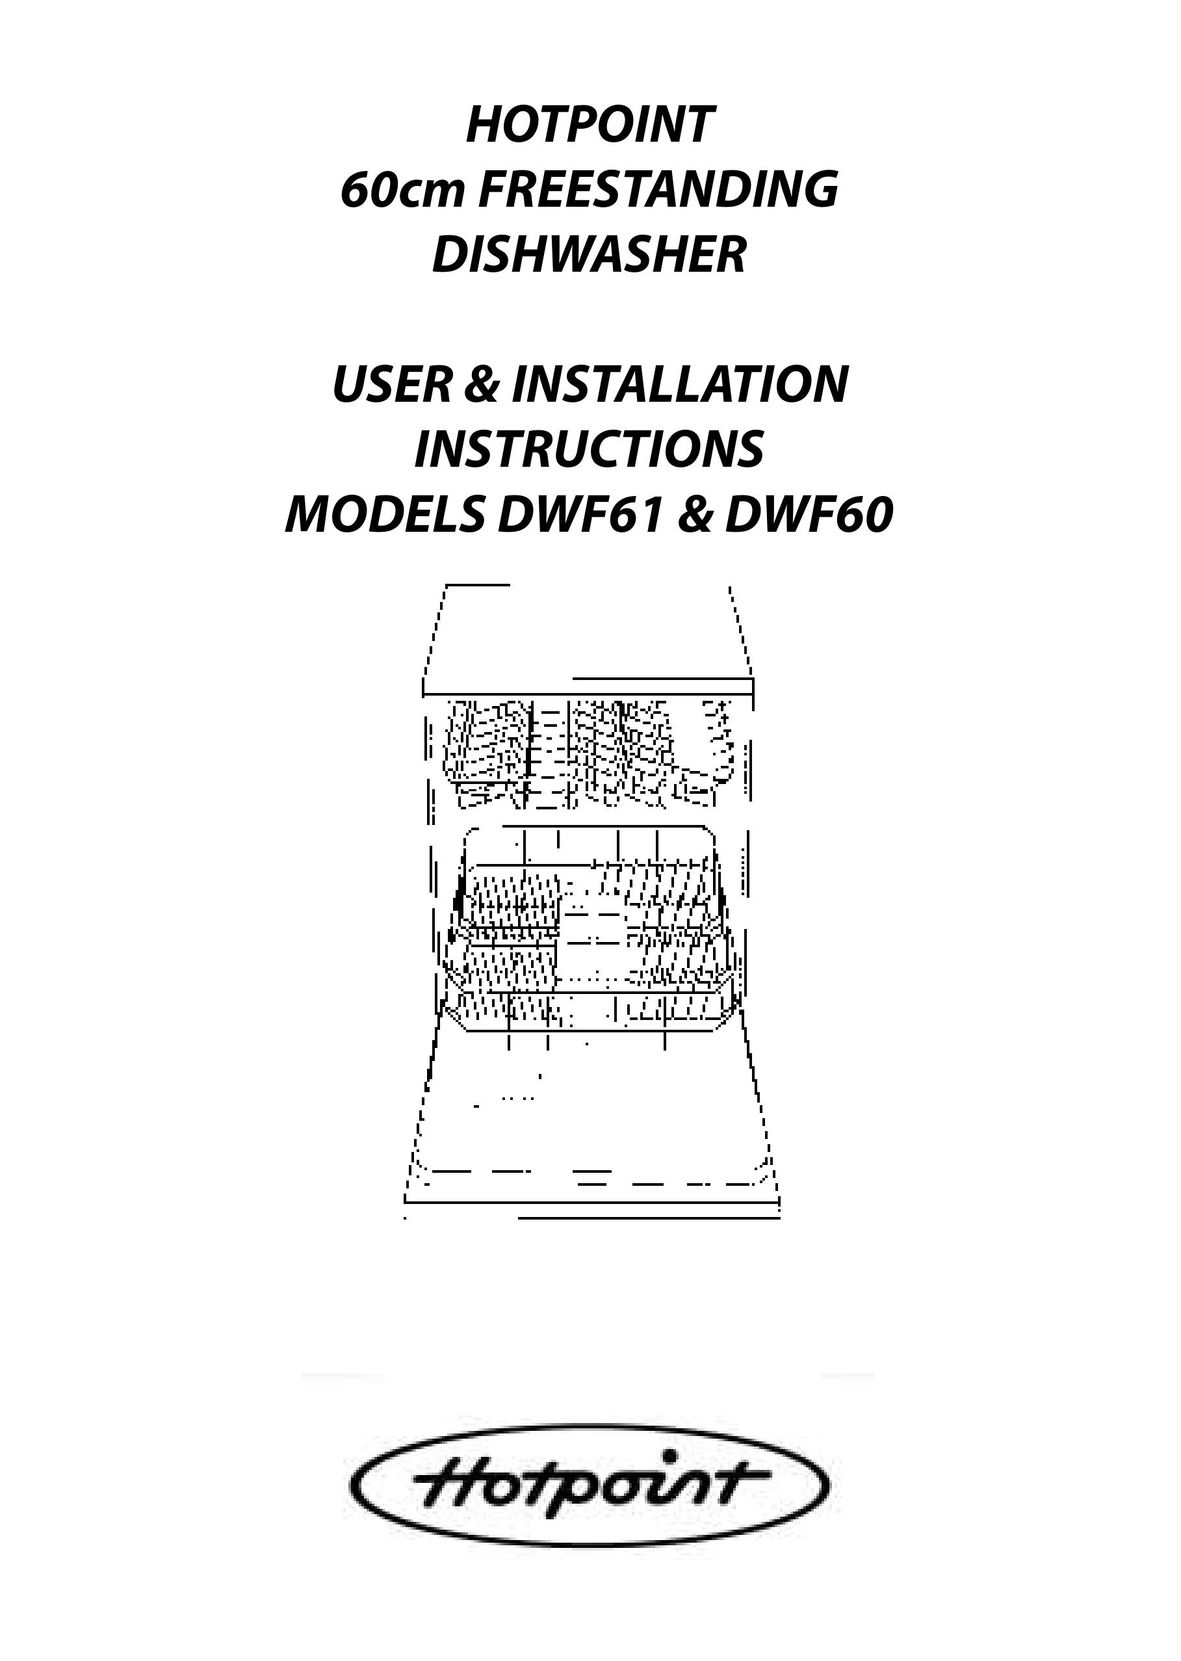 Hotpoint DWF61 Dishwasher User Manual